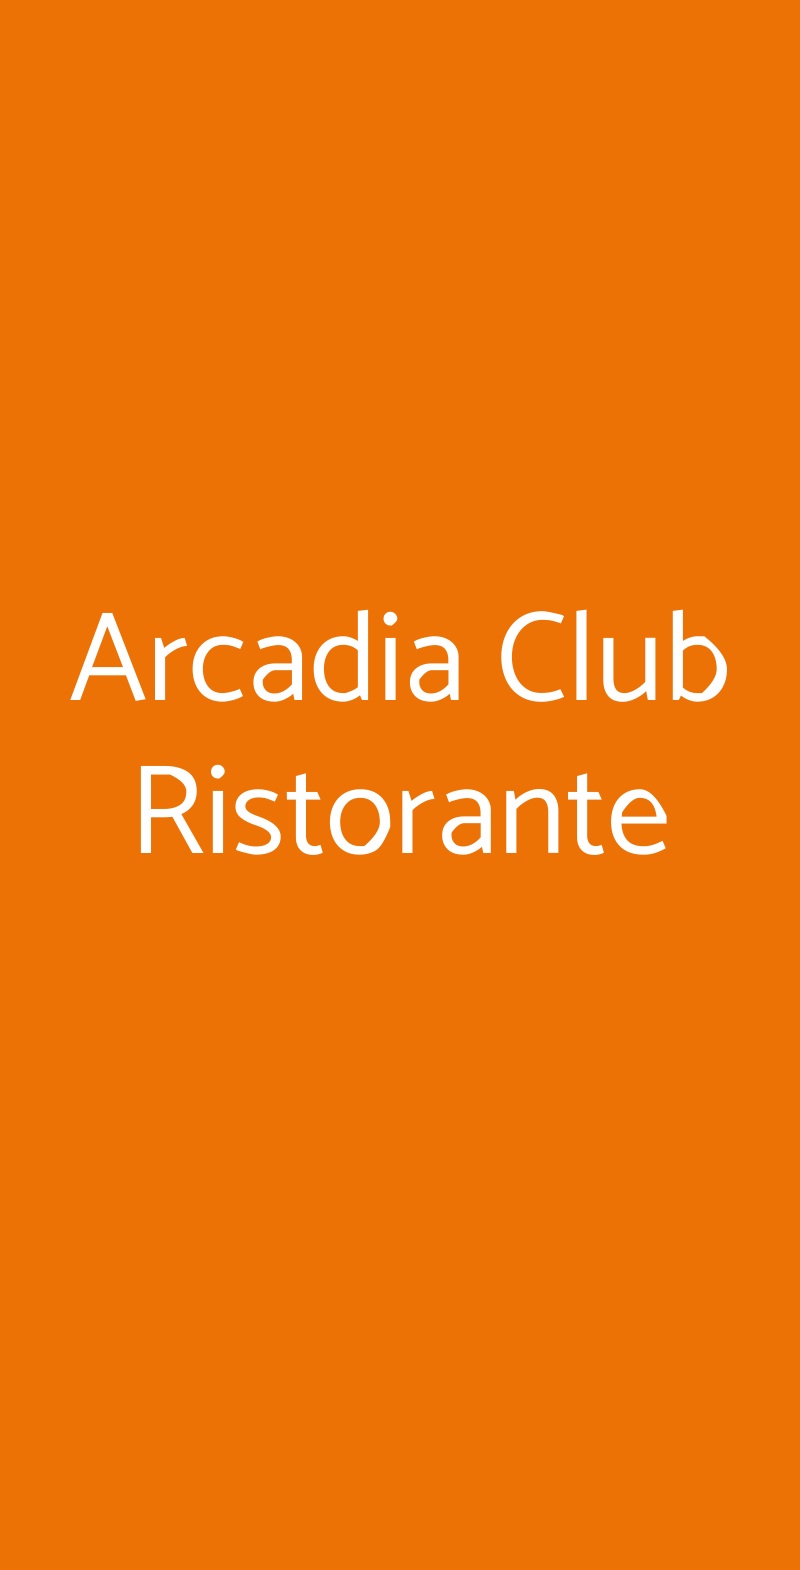 Arcadia Club Ristorante Reano menù 1 pagina